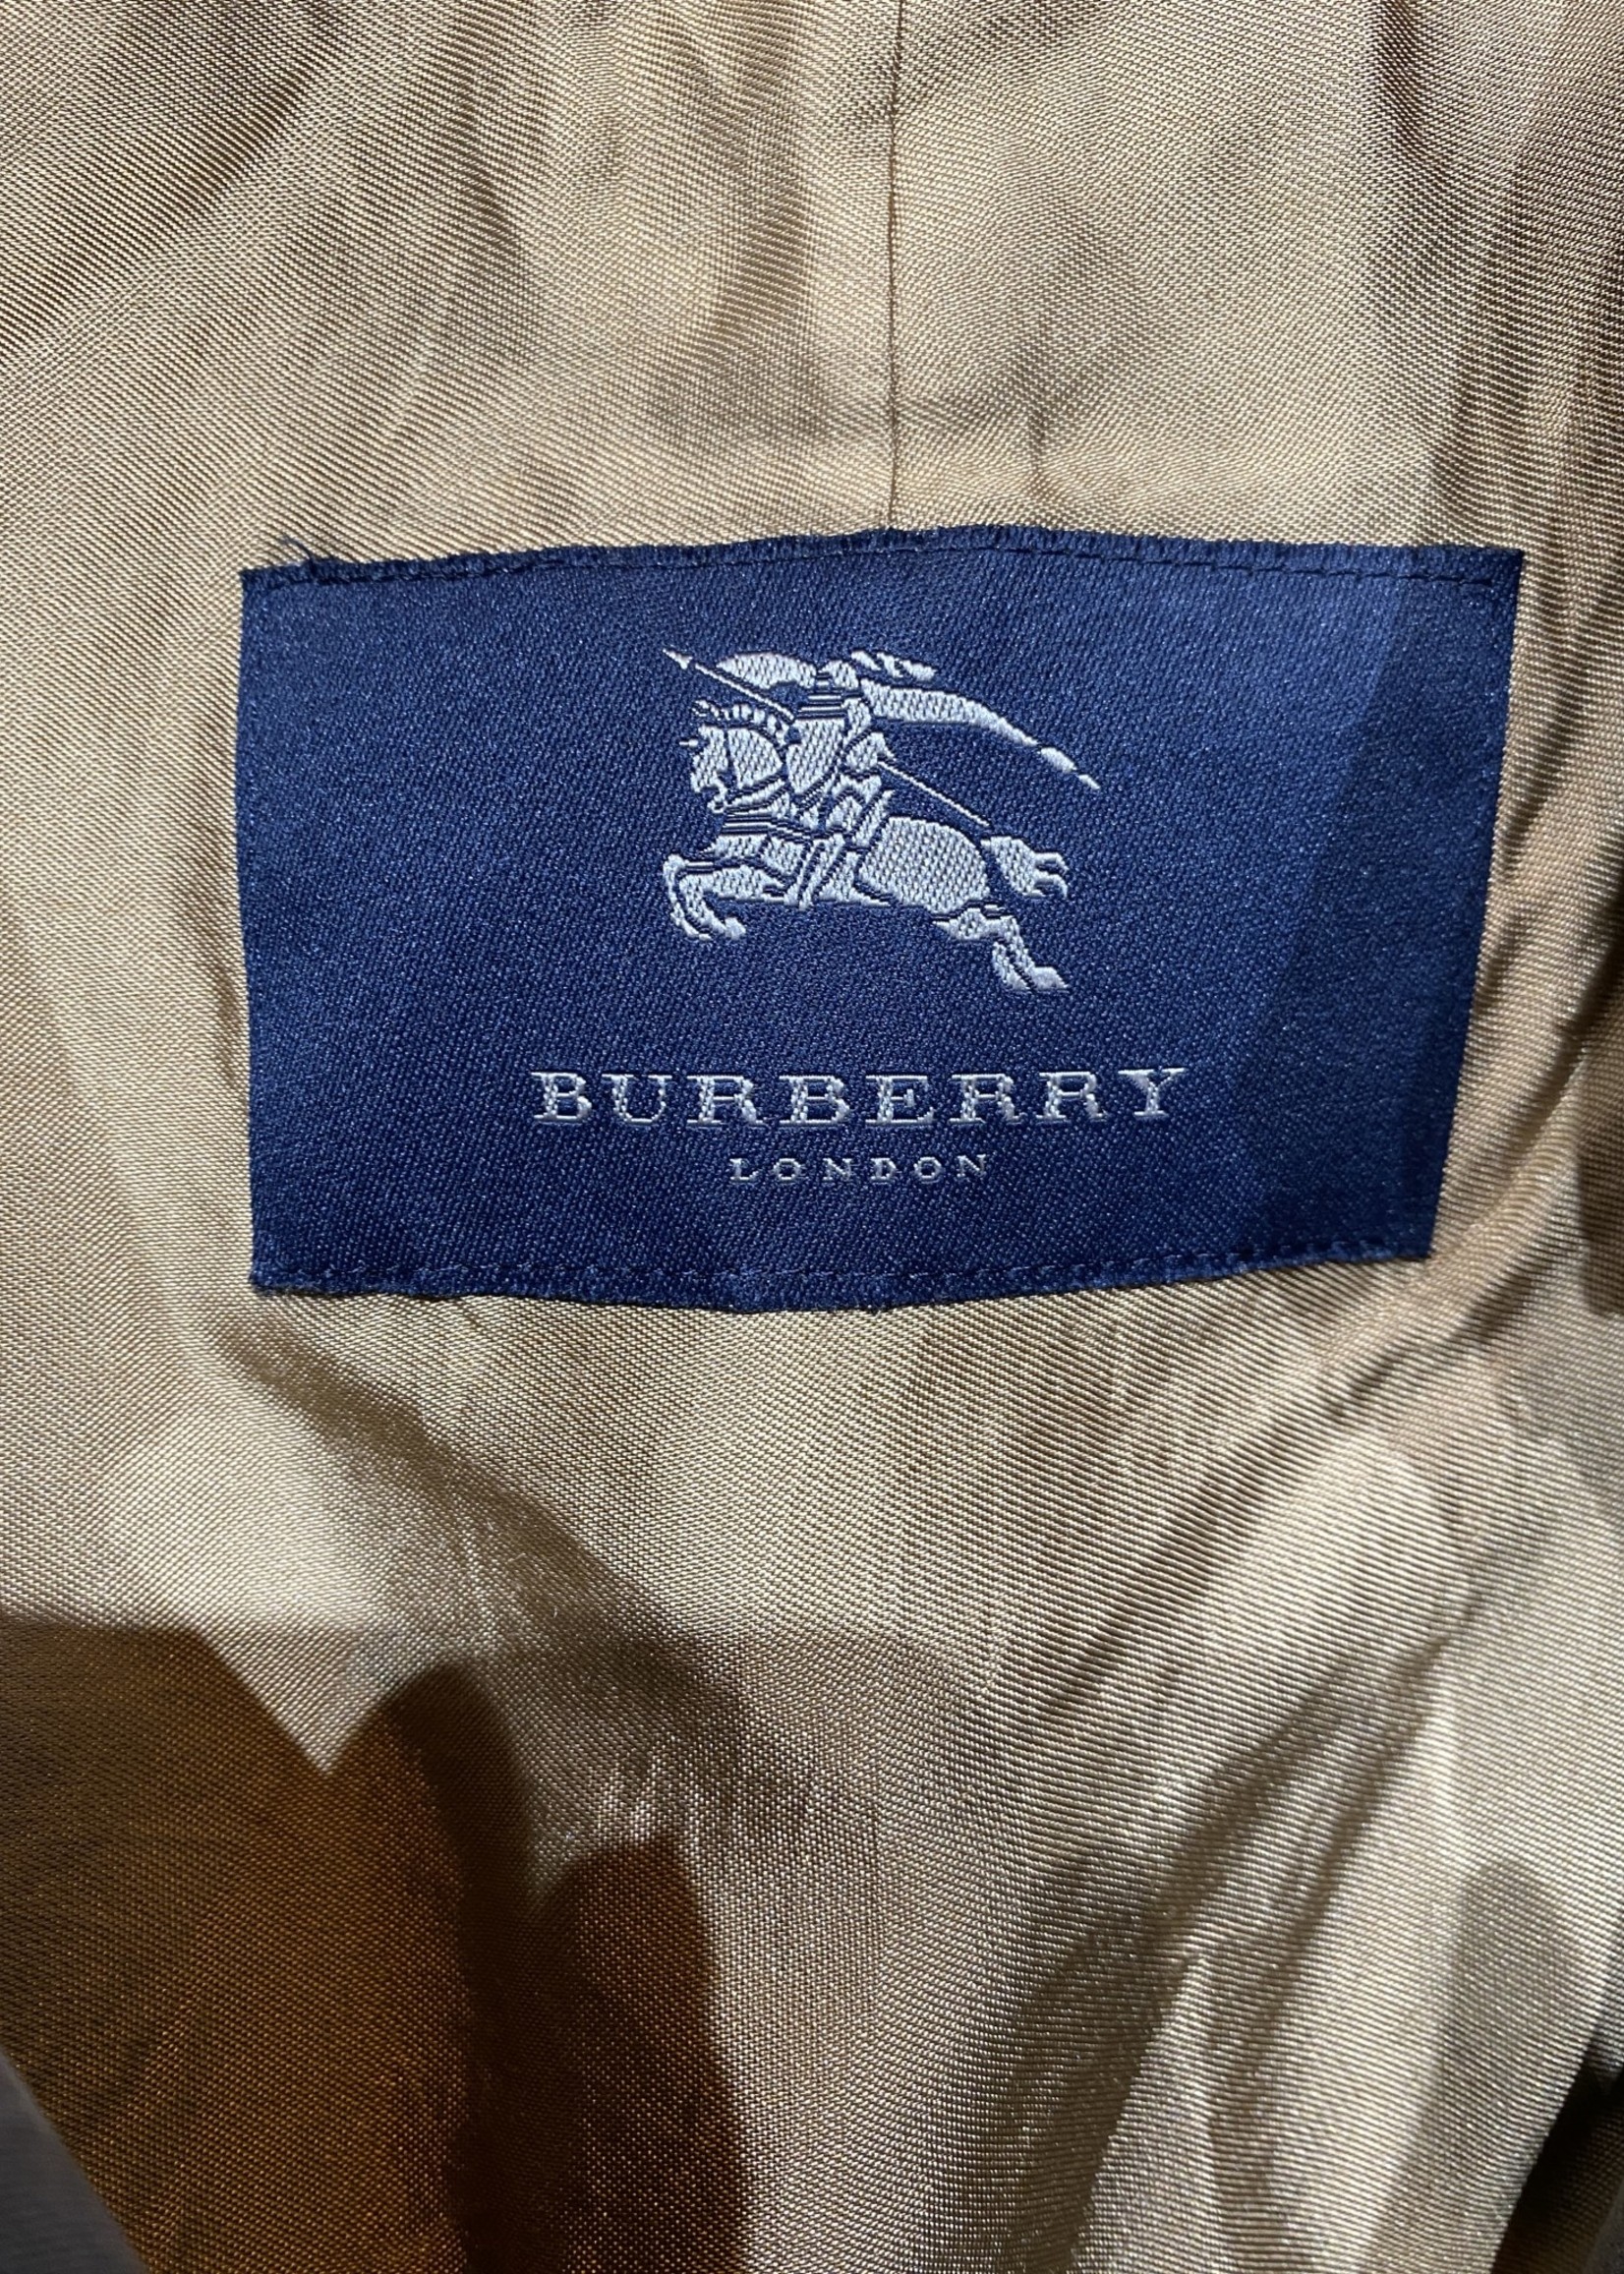 Burberry Trench Coat L/XL